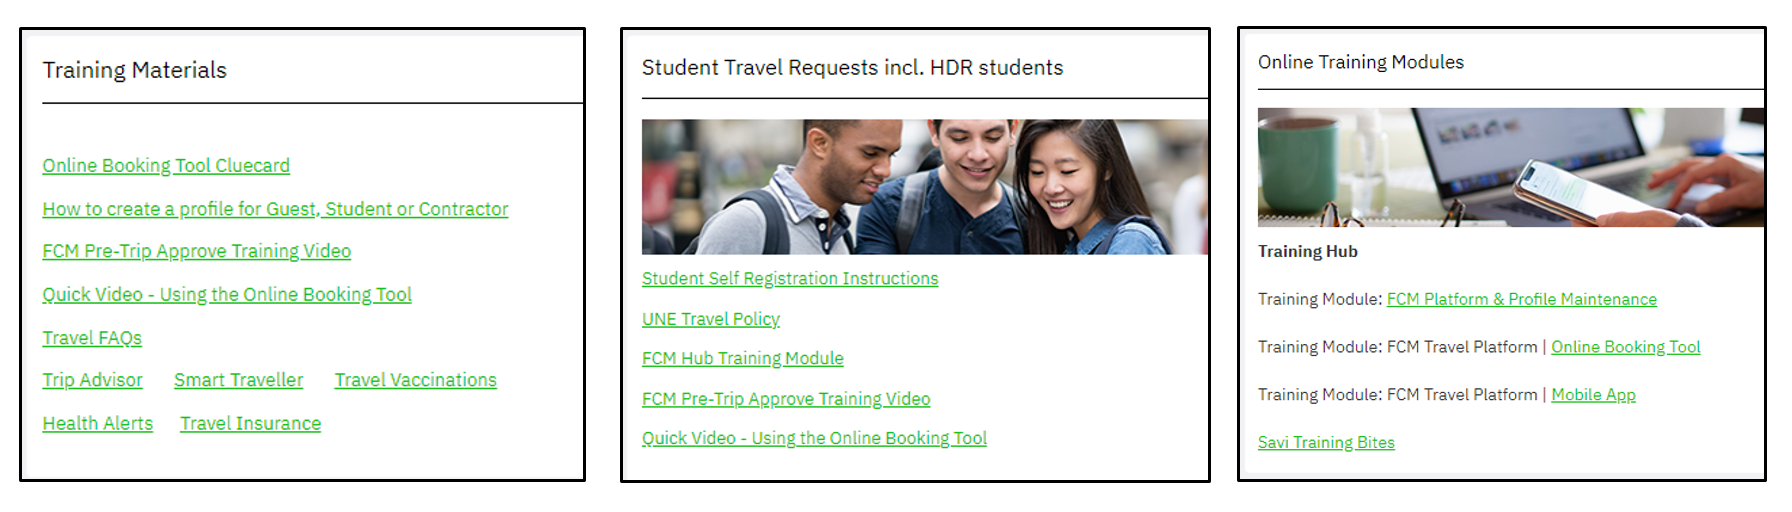 Travel FAQ screenshot